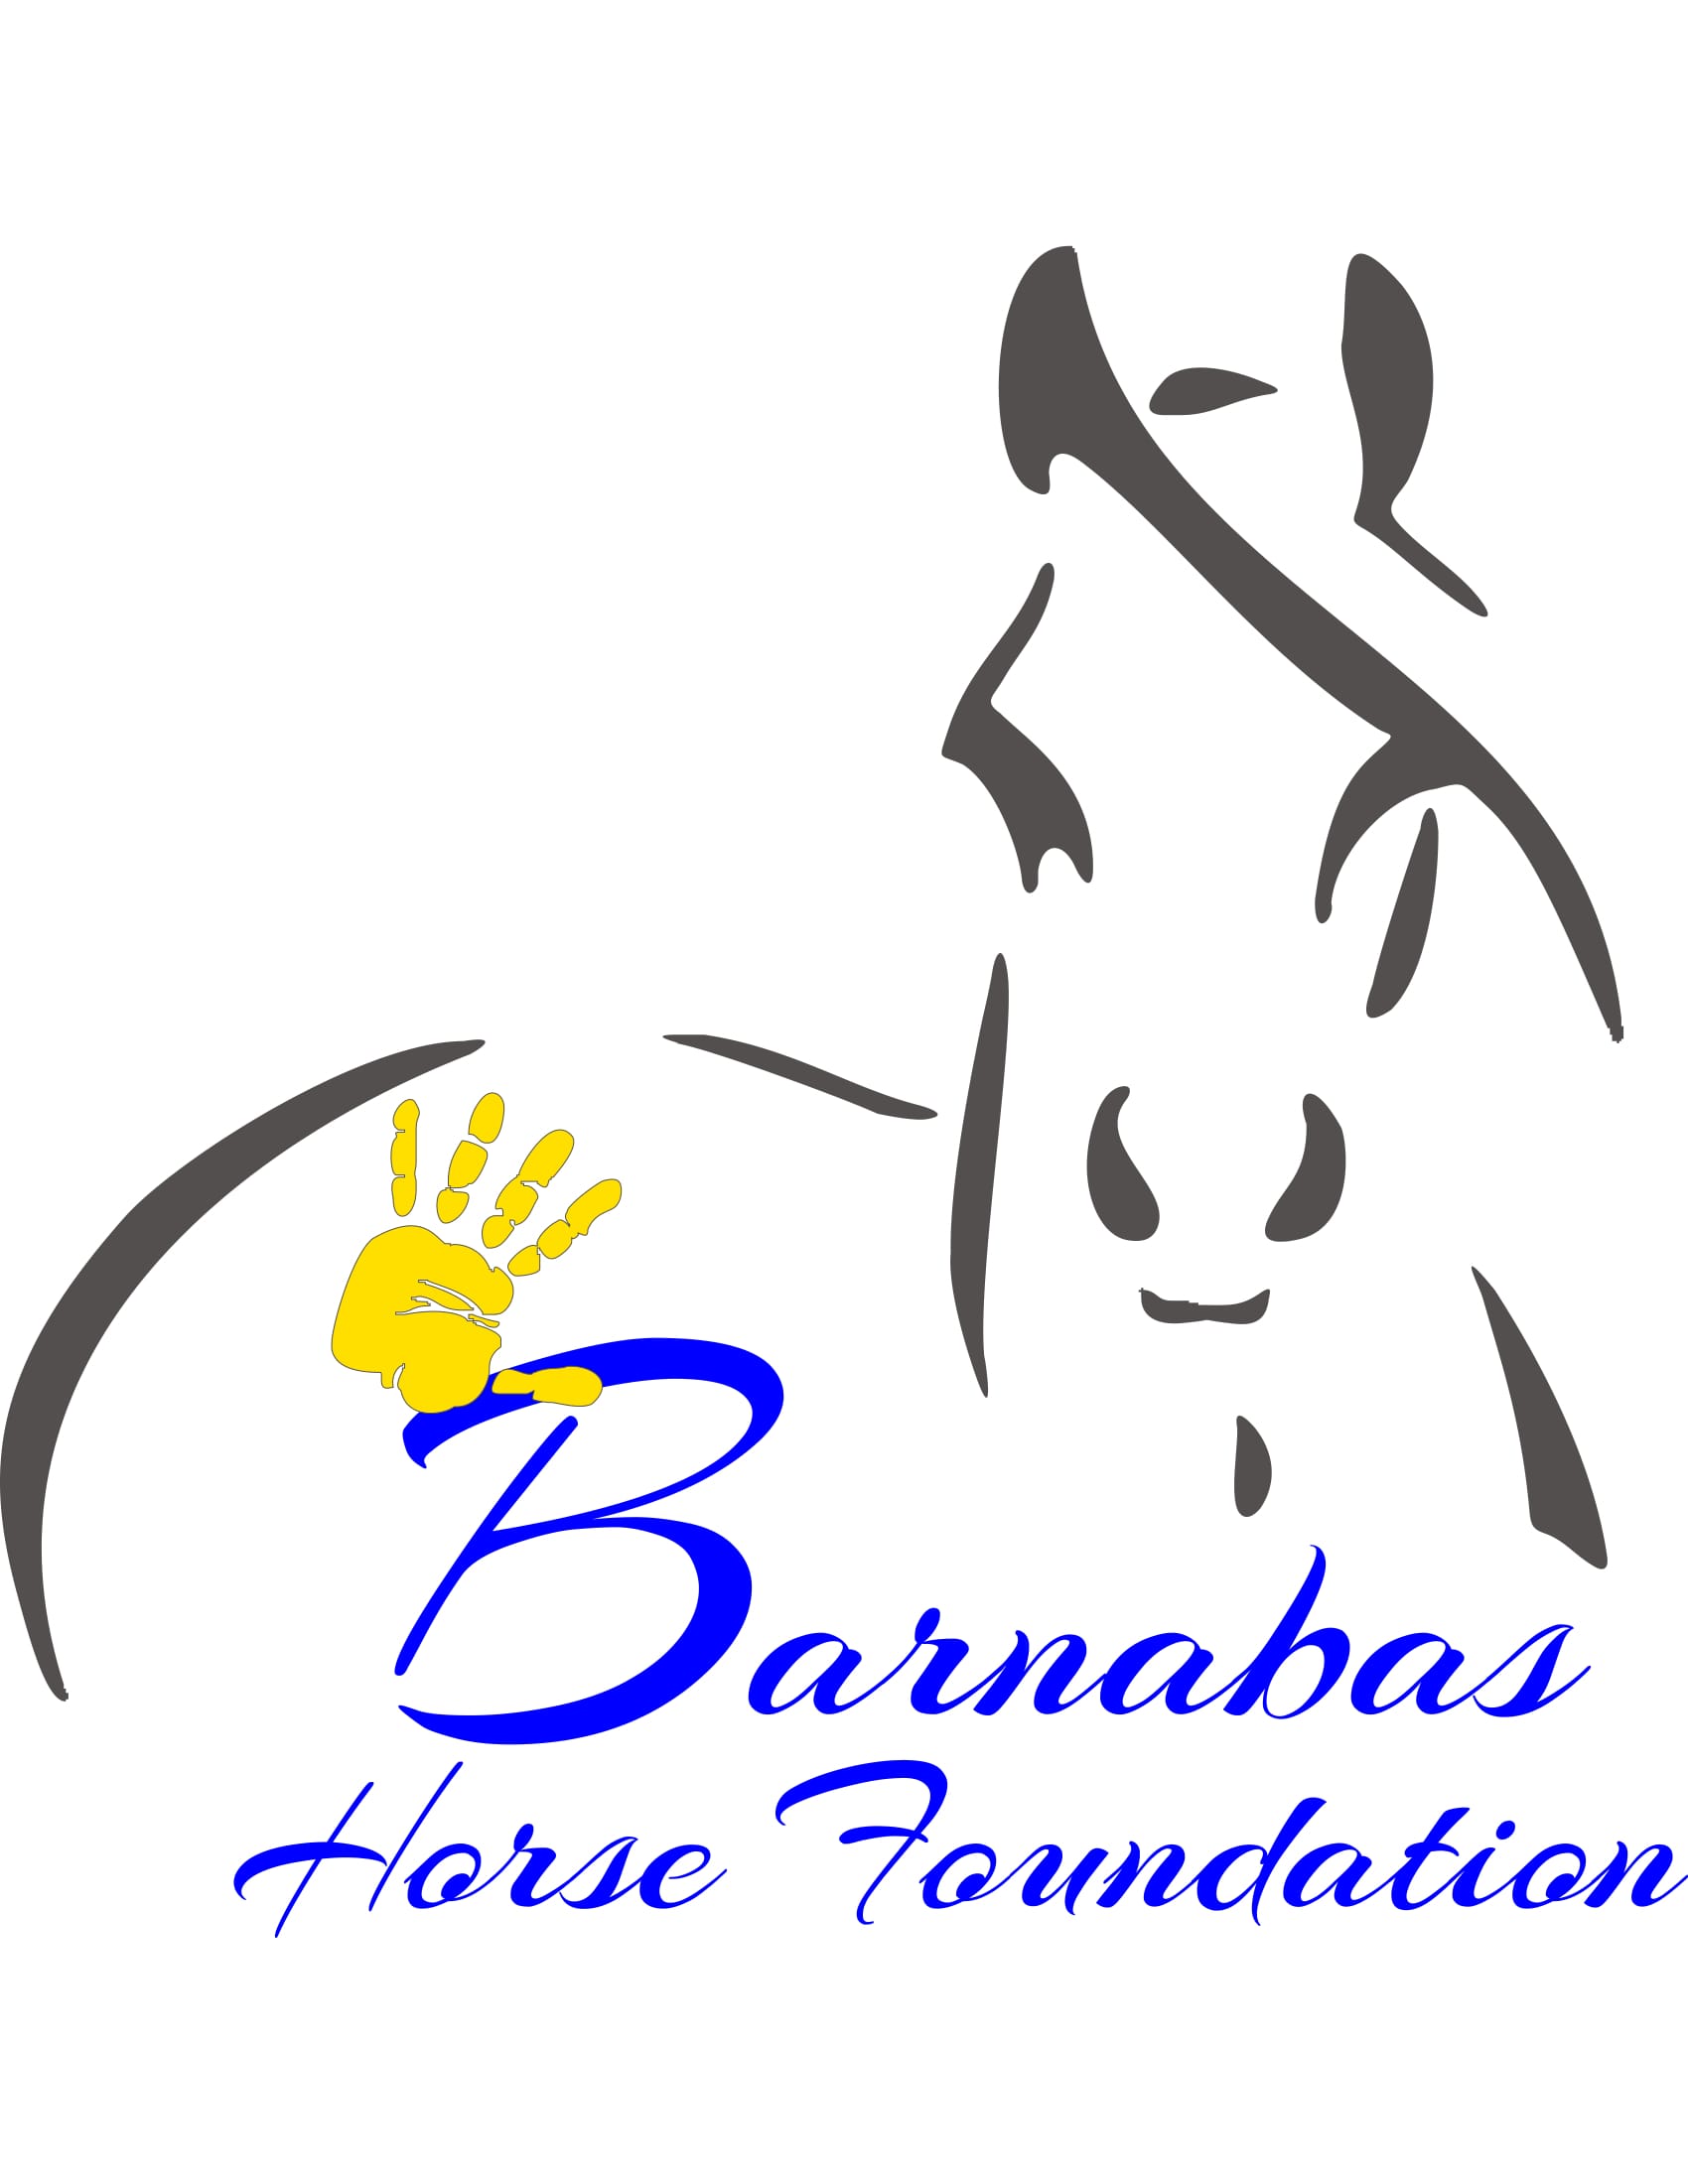 Barnabas Horse Foundation